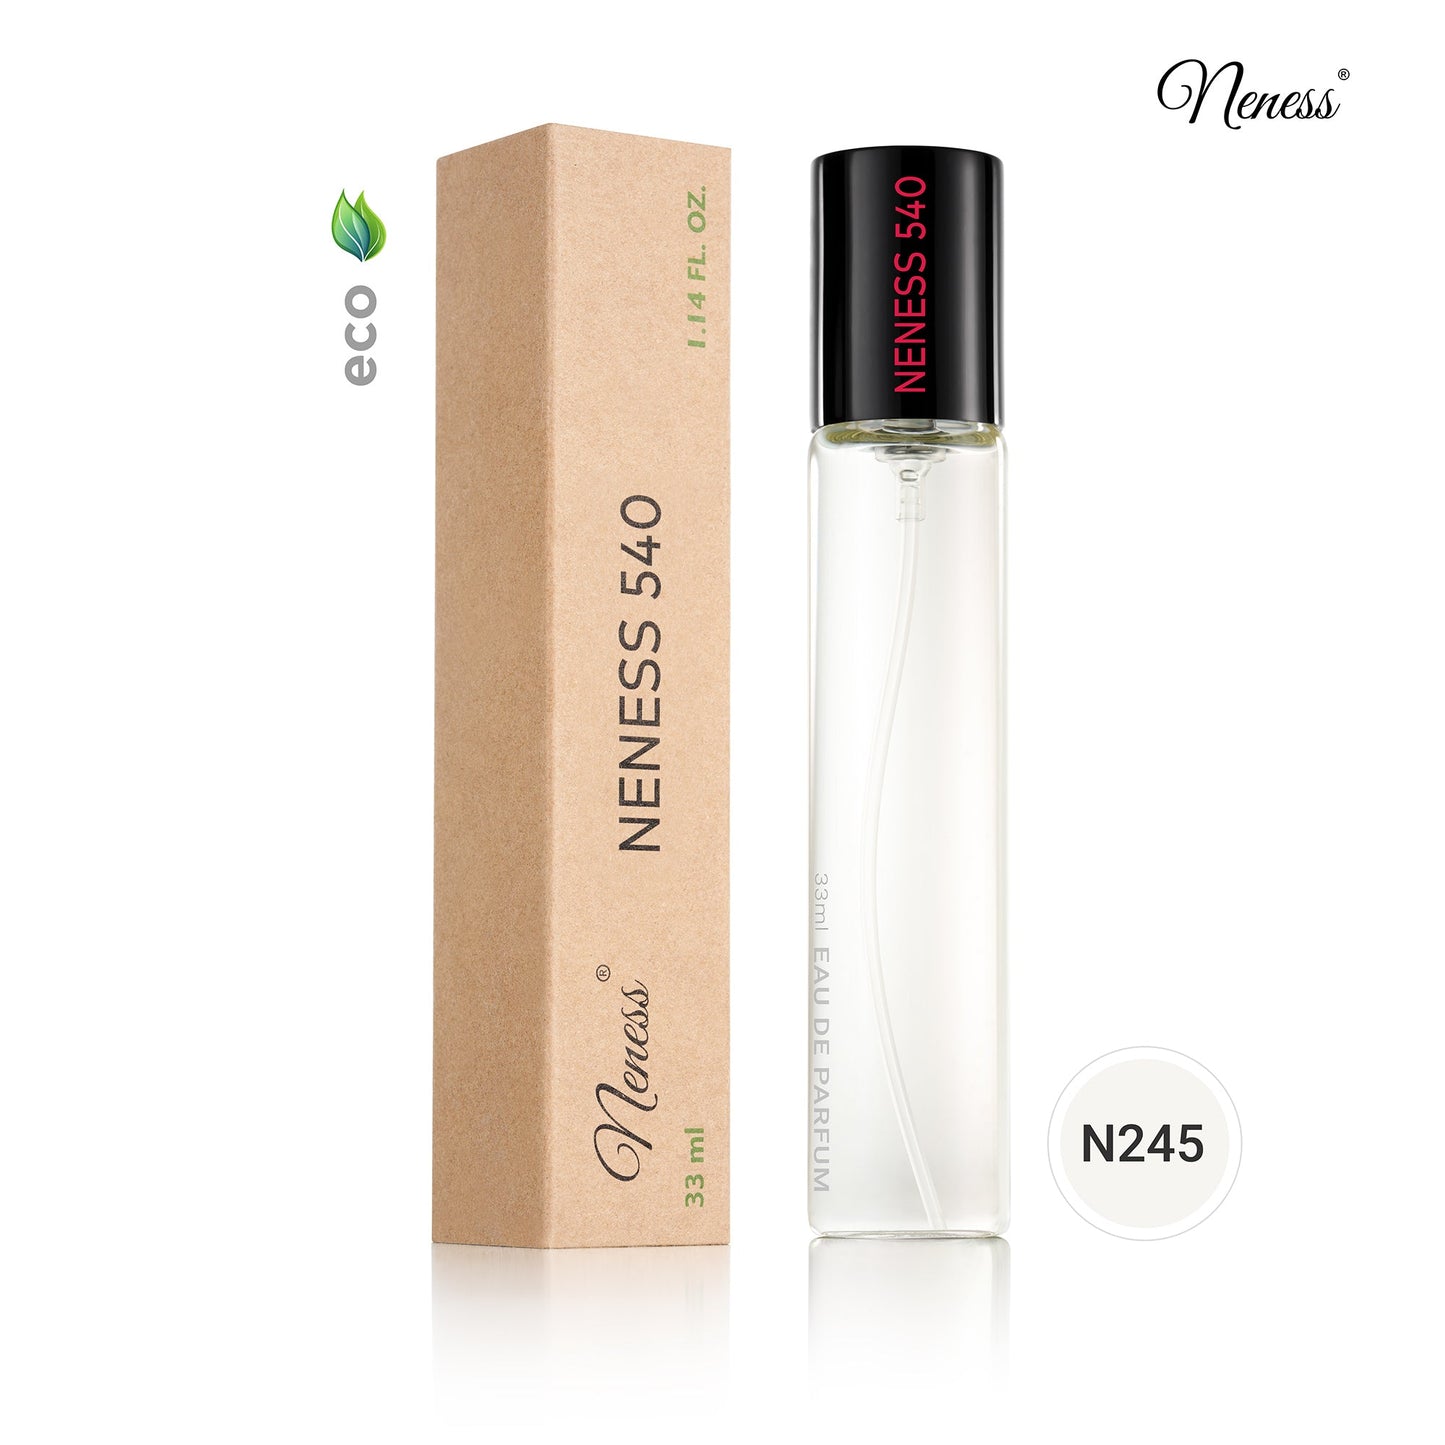 N245. Neness 540 - 33 ml - Parfums unisexes